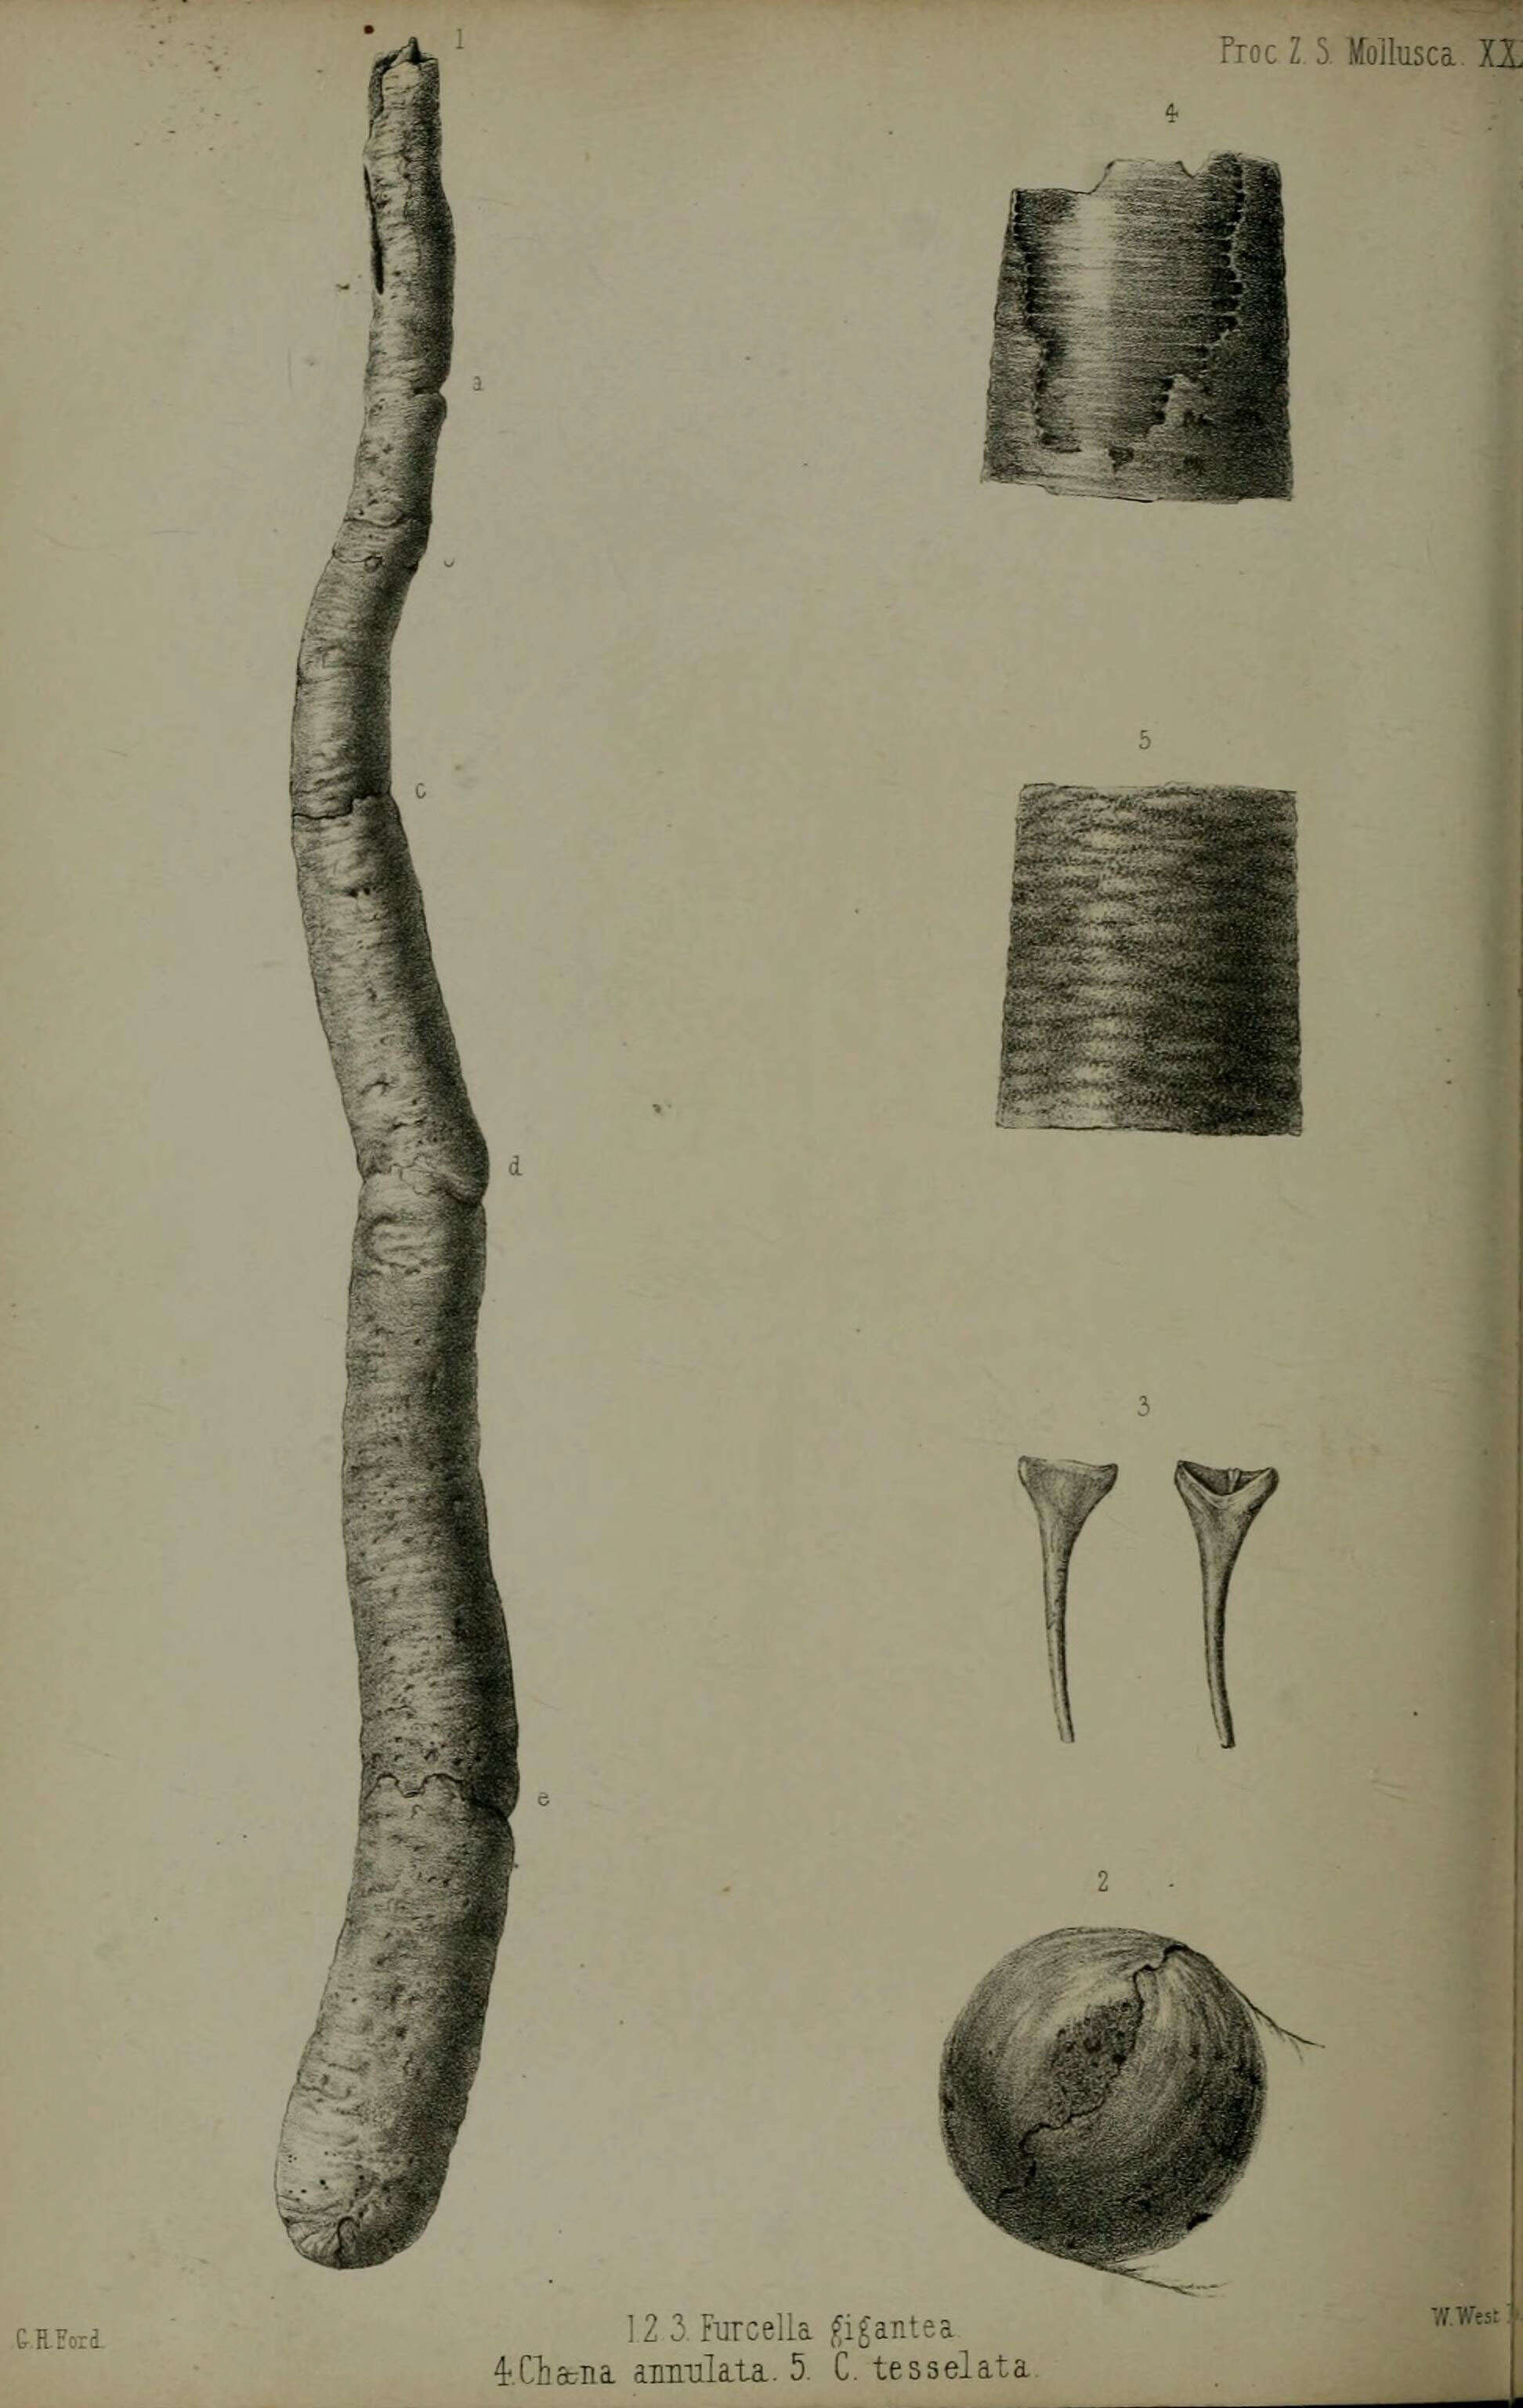 Image de Kuphus polythalamius (Linnaeus 1767)